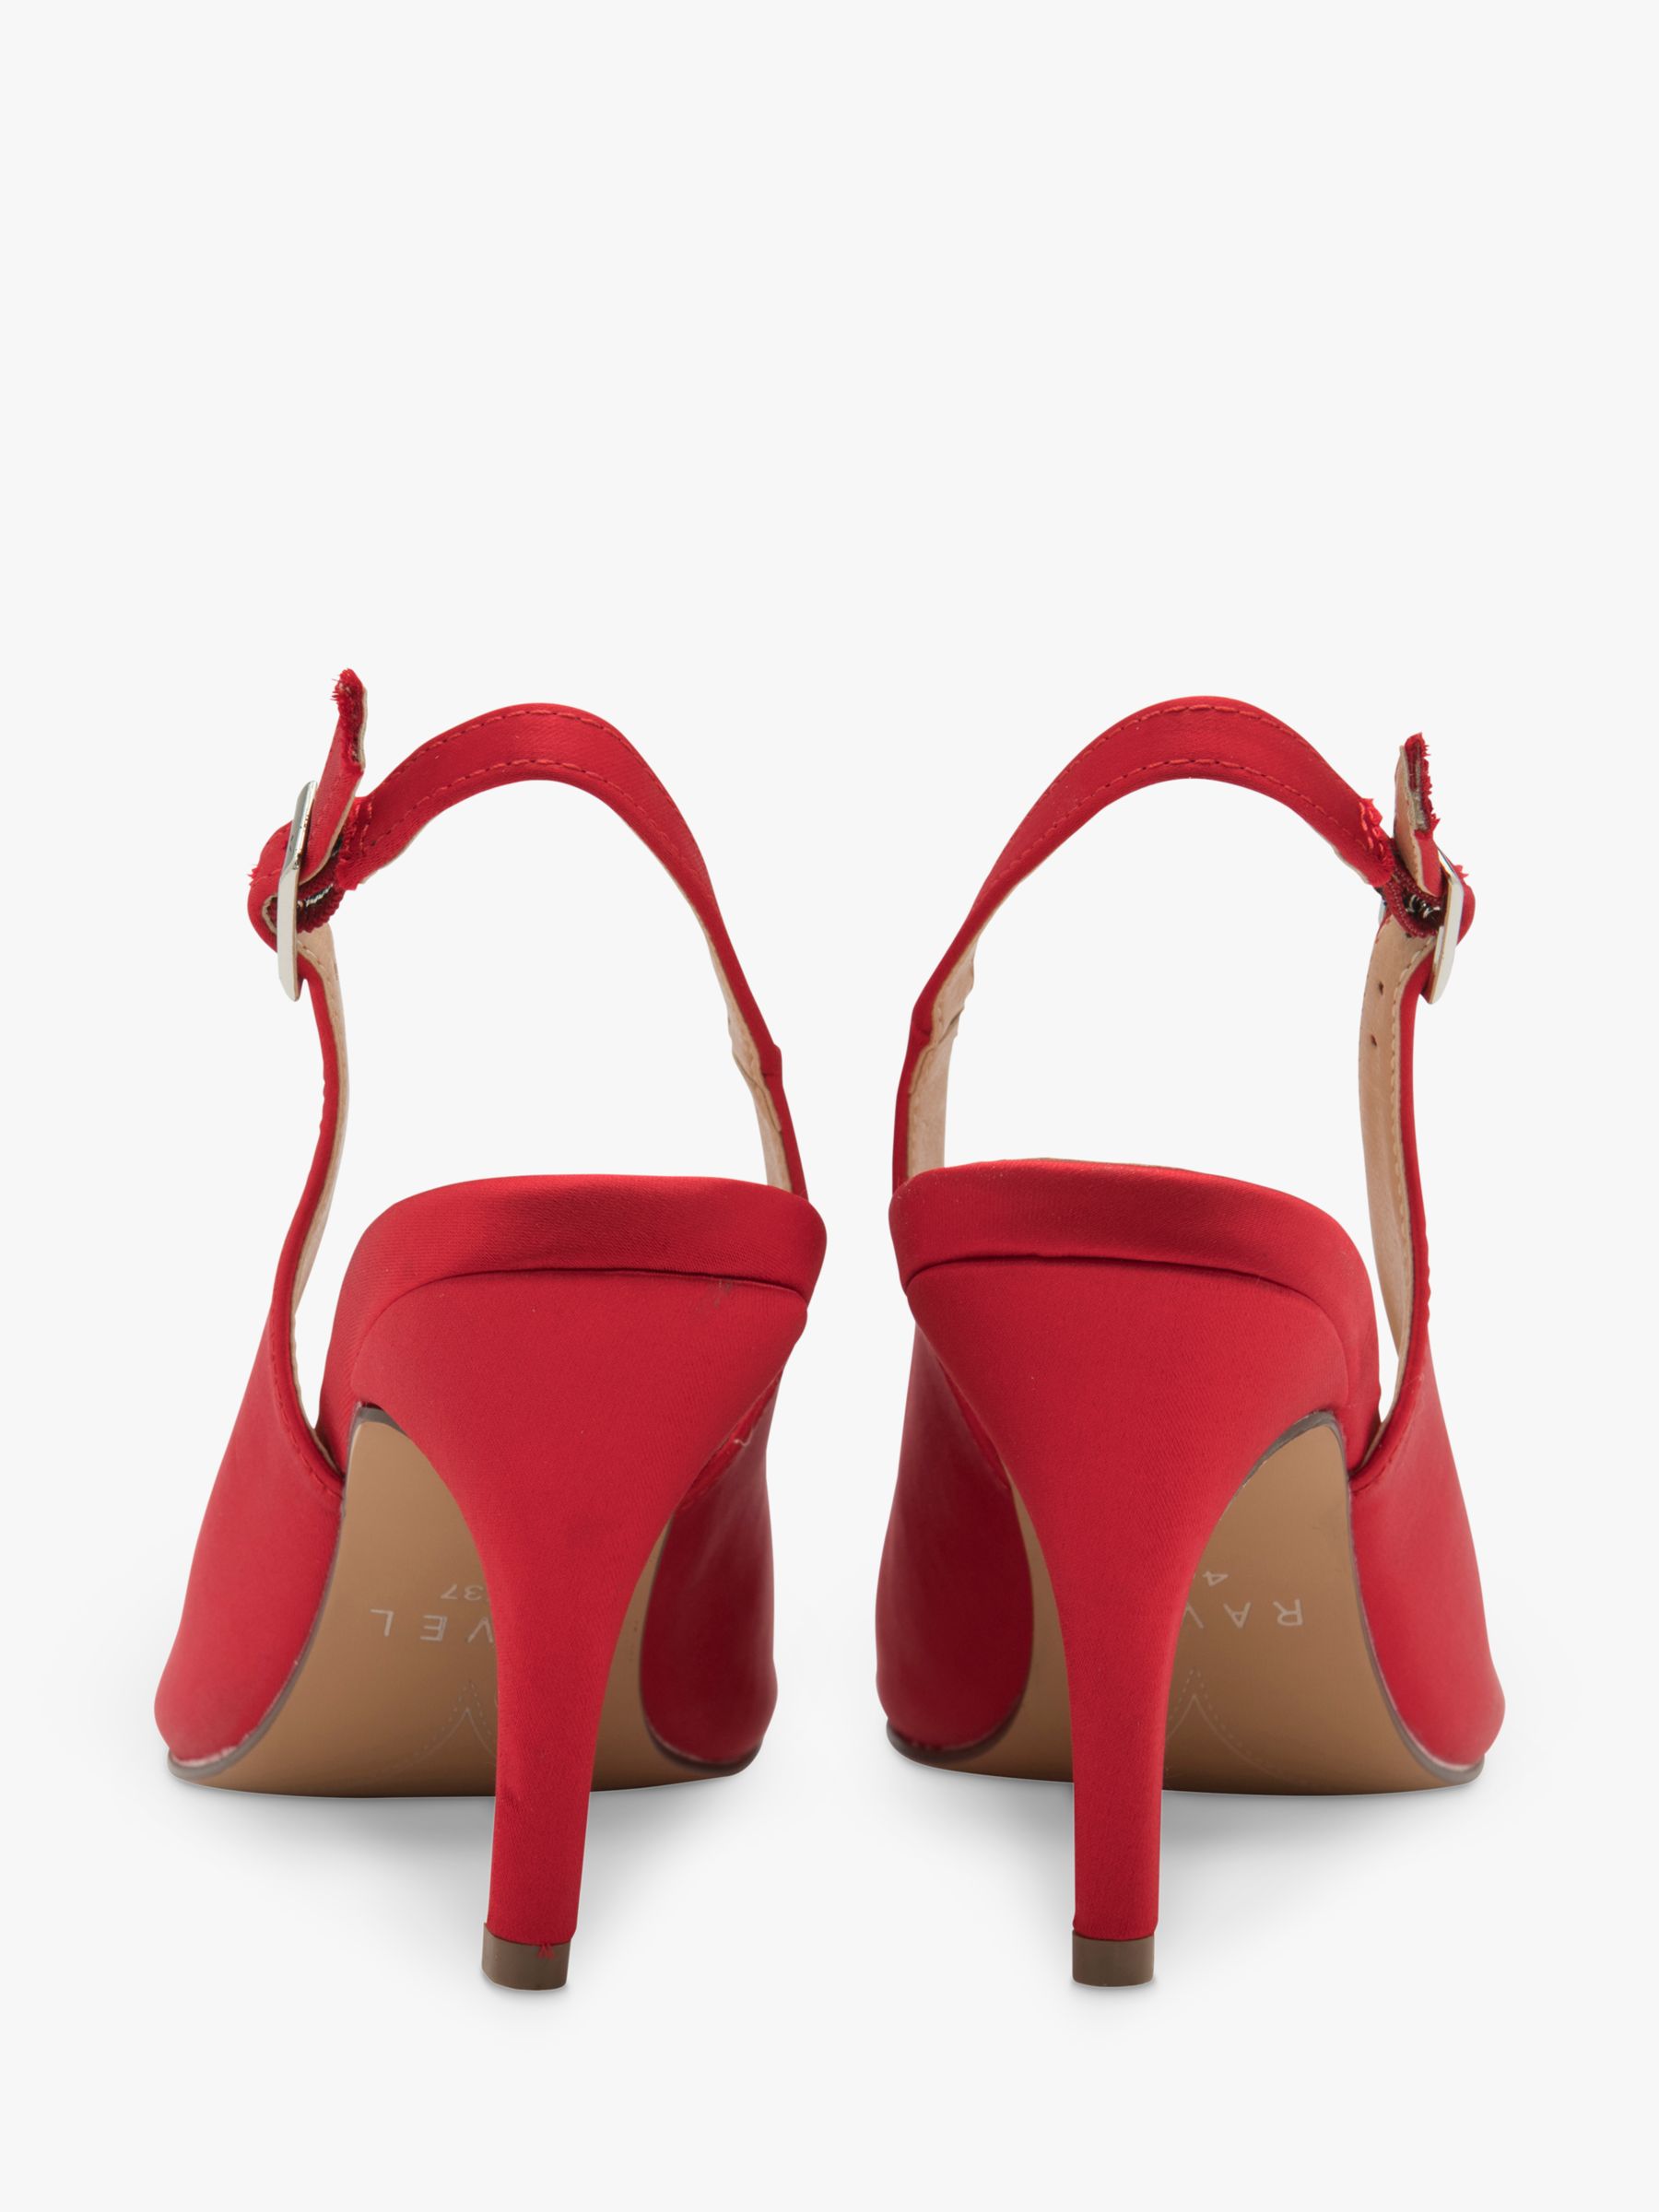 Buy Ravel Kavan Satin Stiletto Heel Slingback Court Shoes Online at johnlewis.com